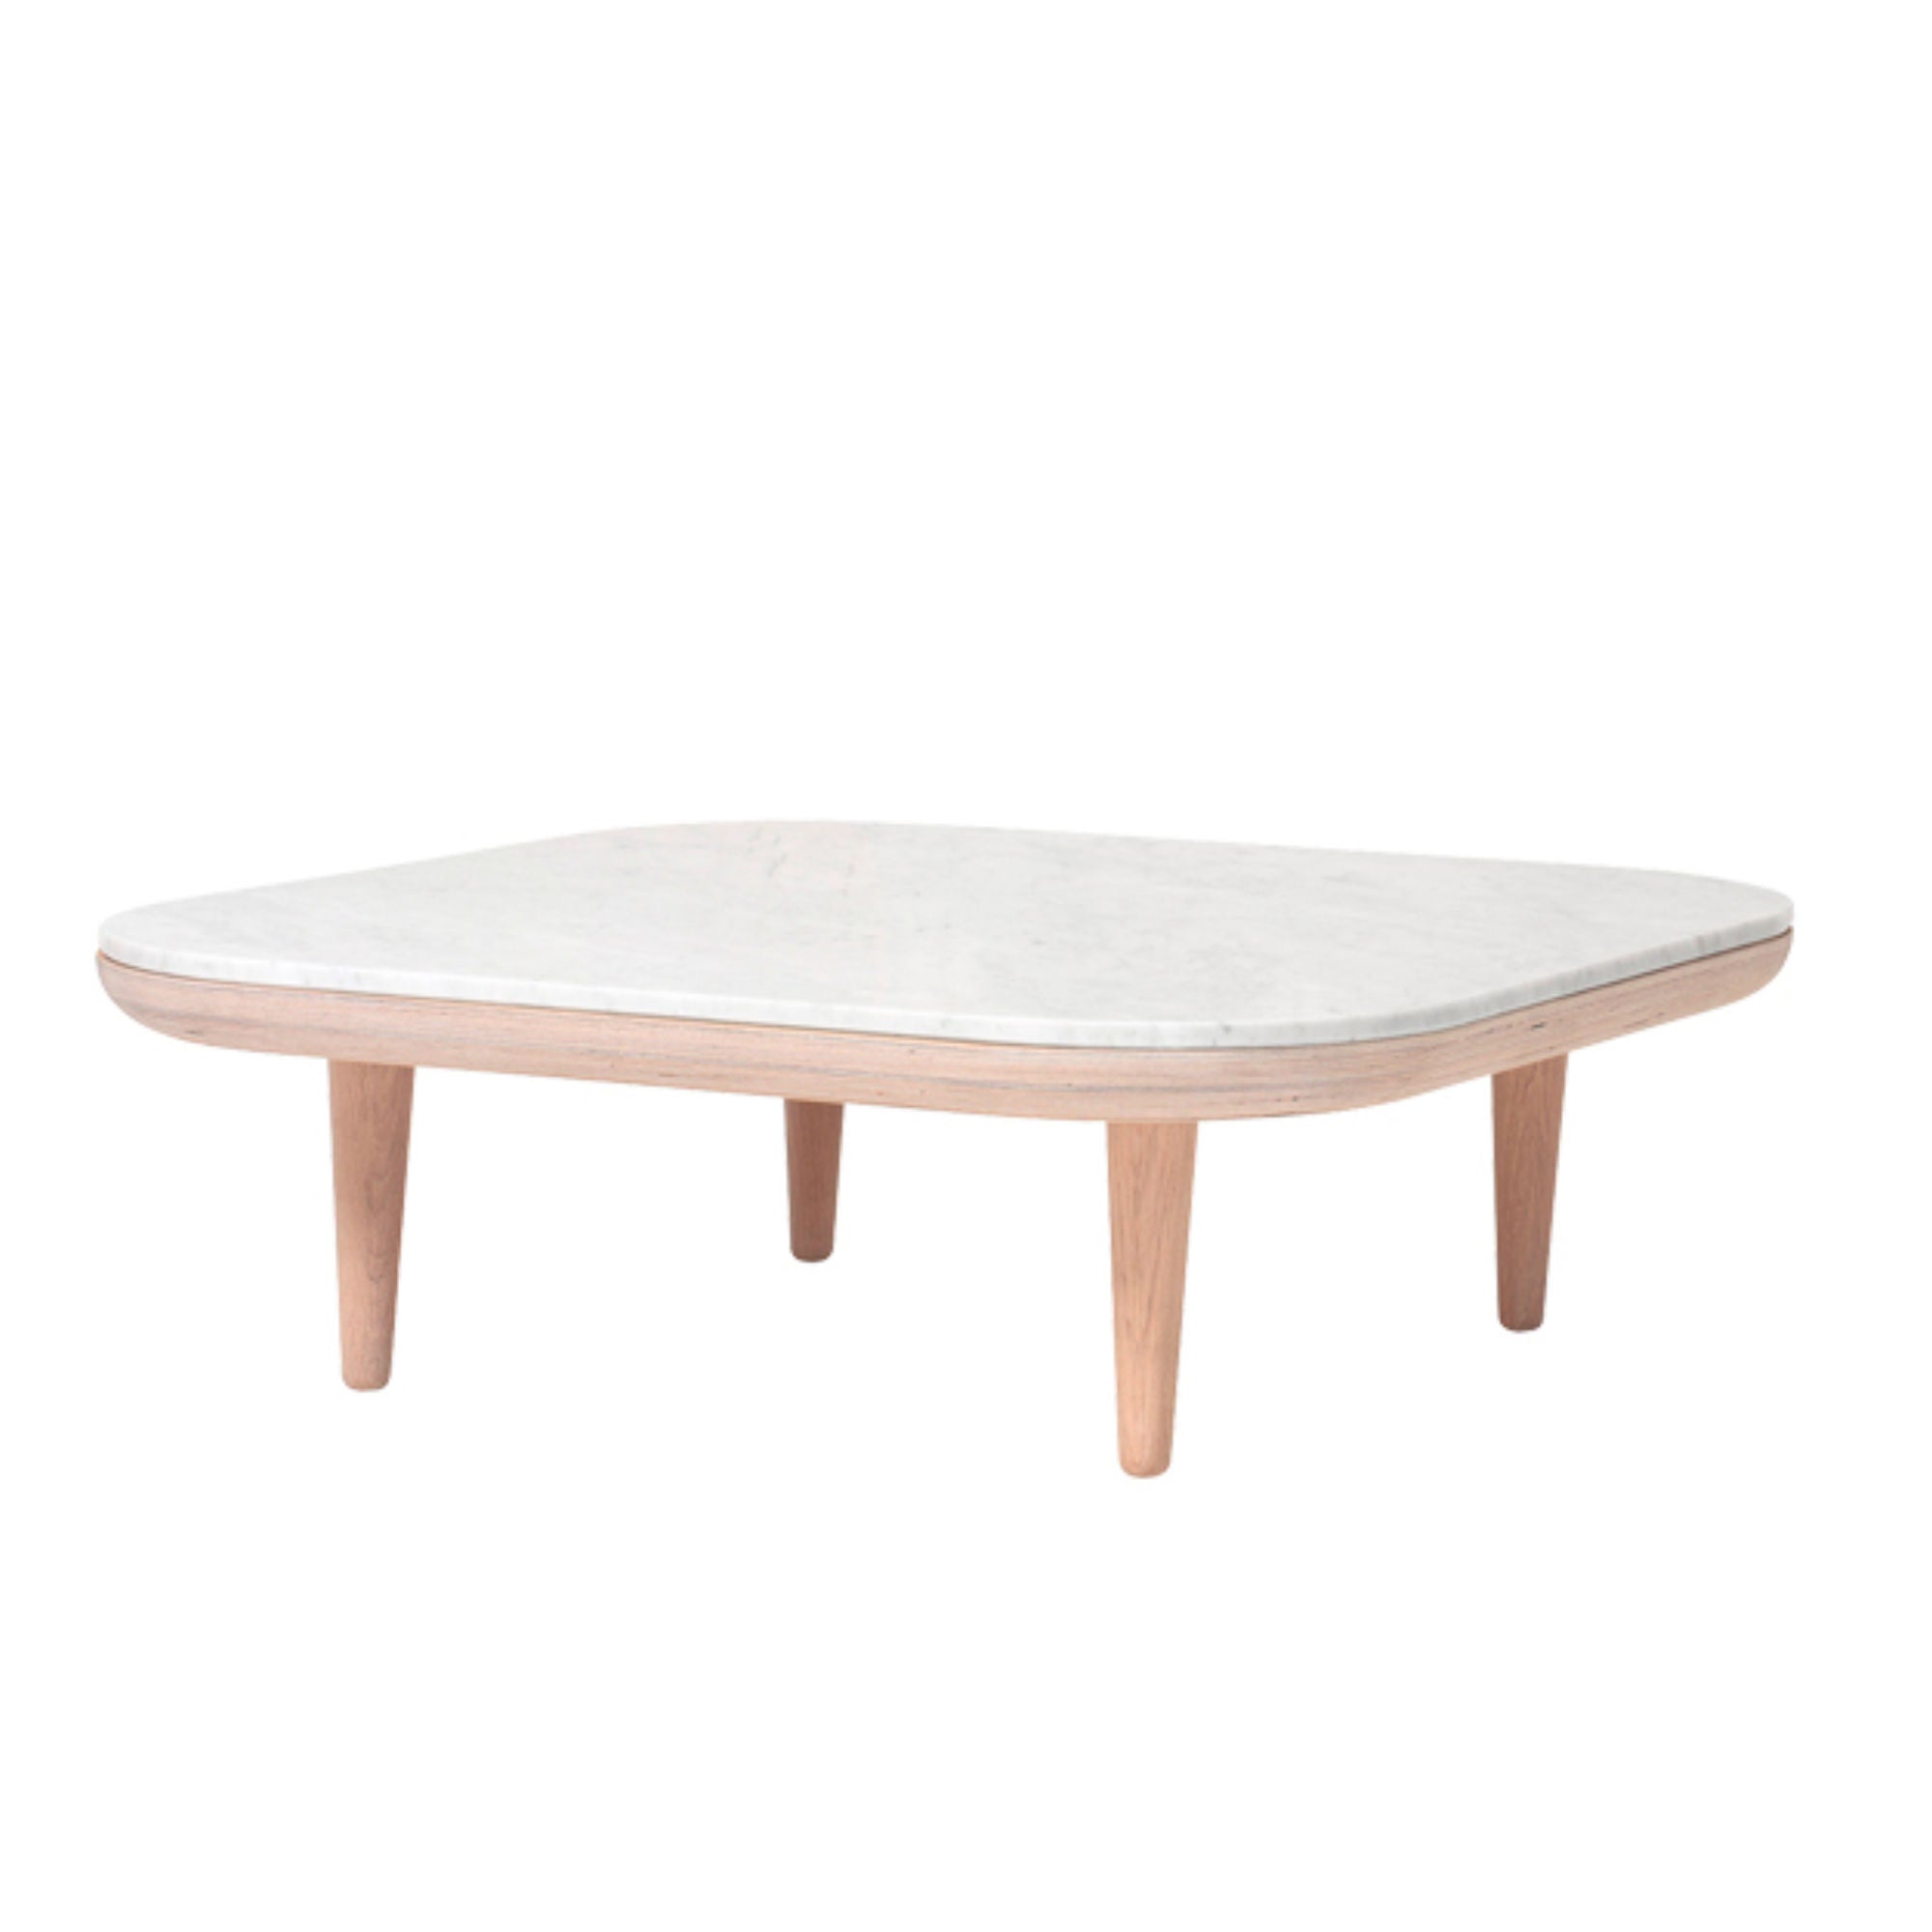 &Tradition SC4 Fly table, white oiled oak/ honed bianco carrara